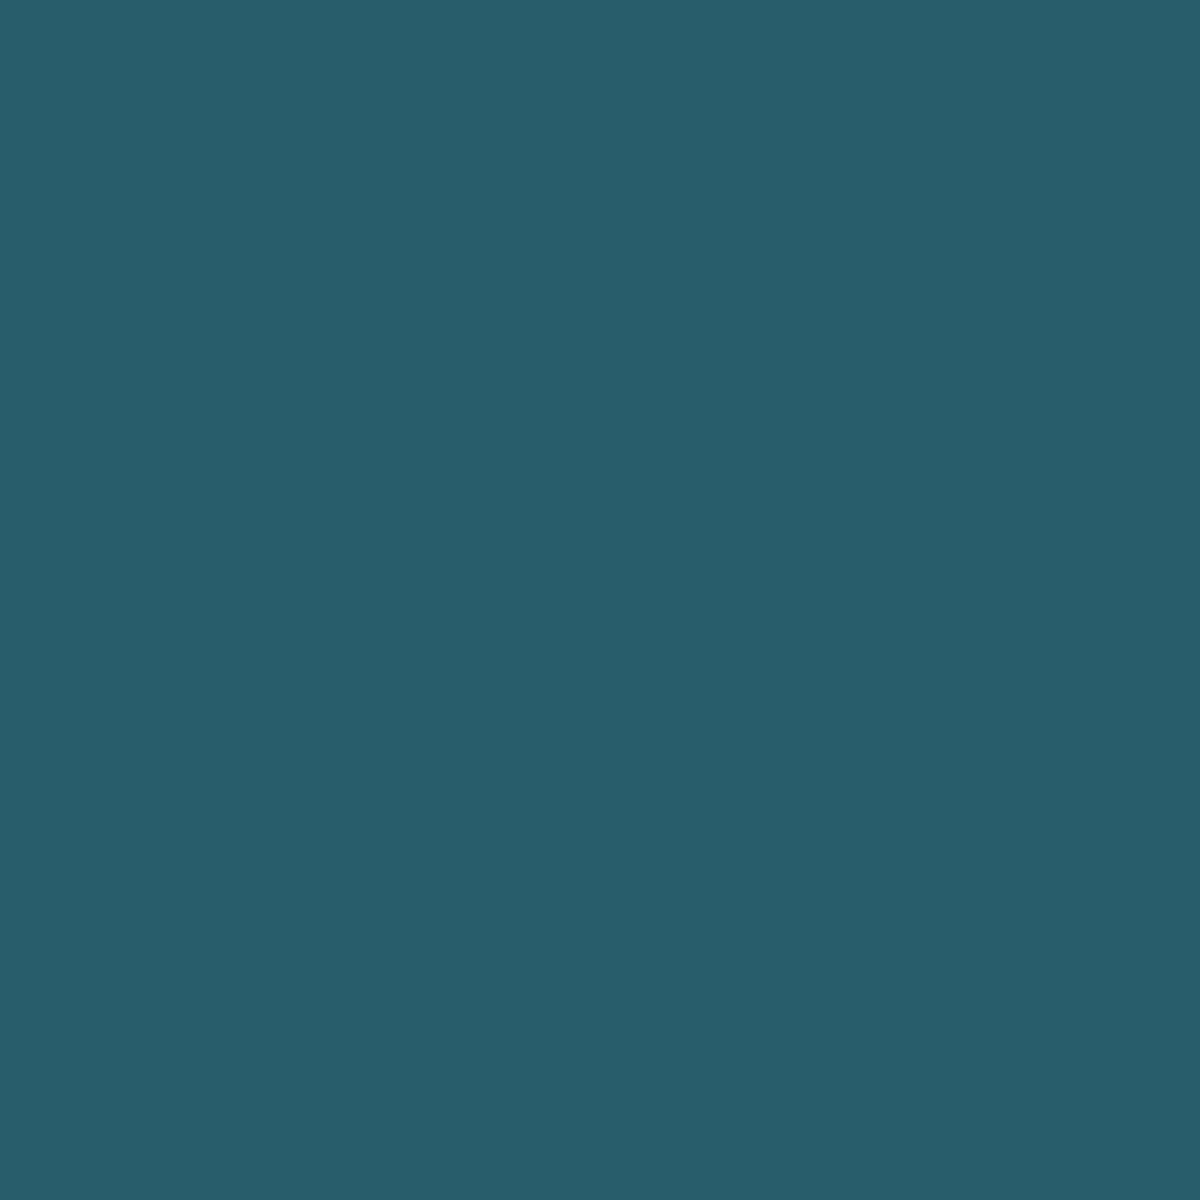 Bermuda Turquoise 728